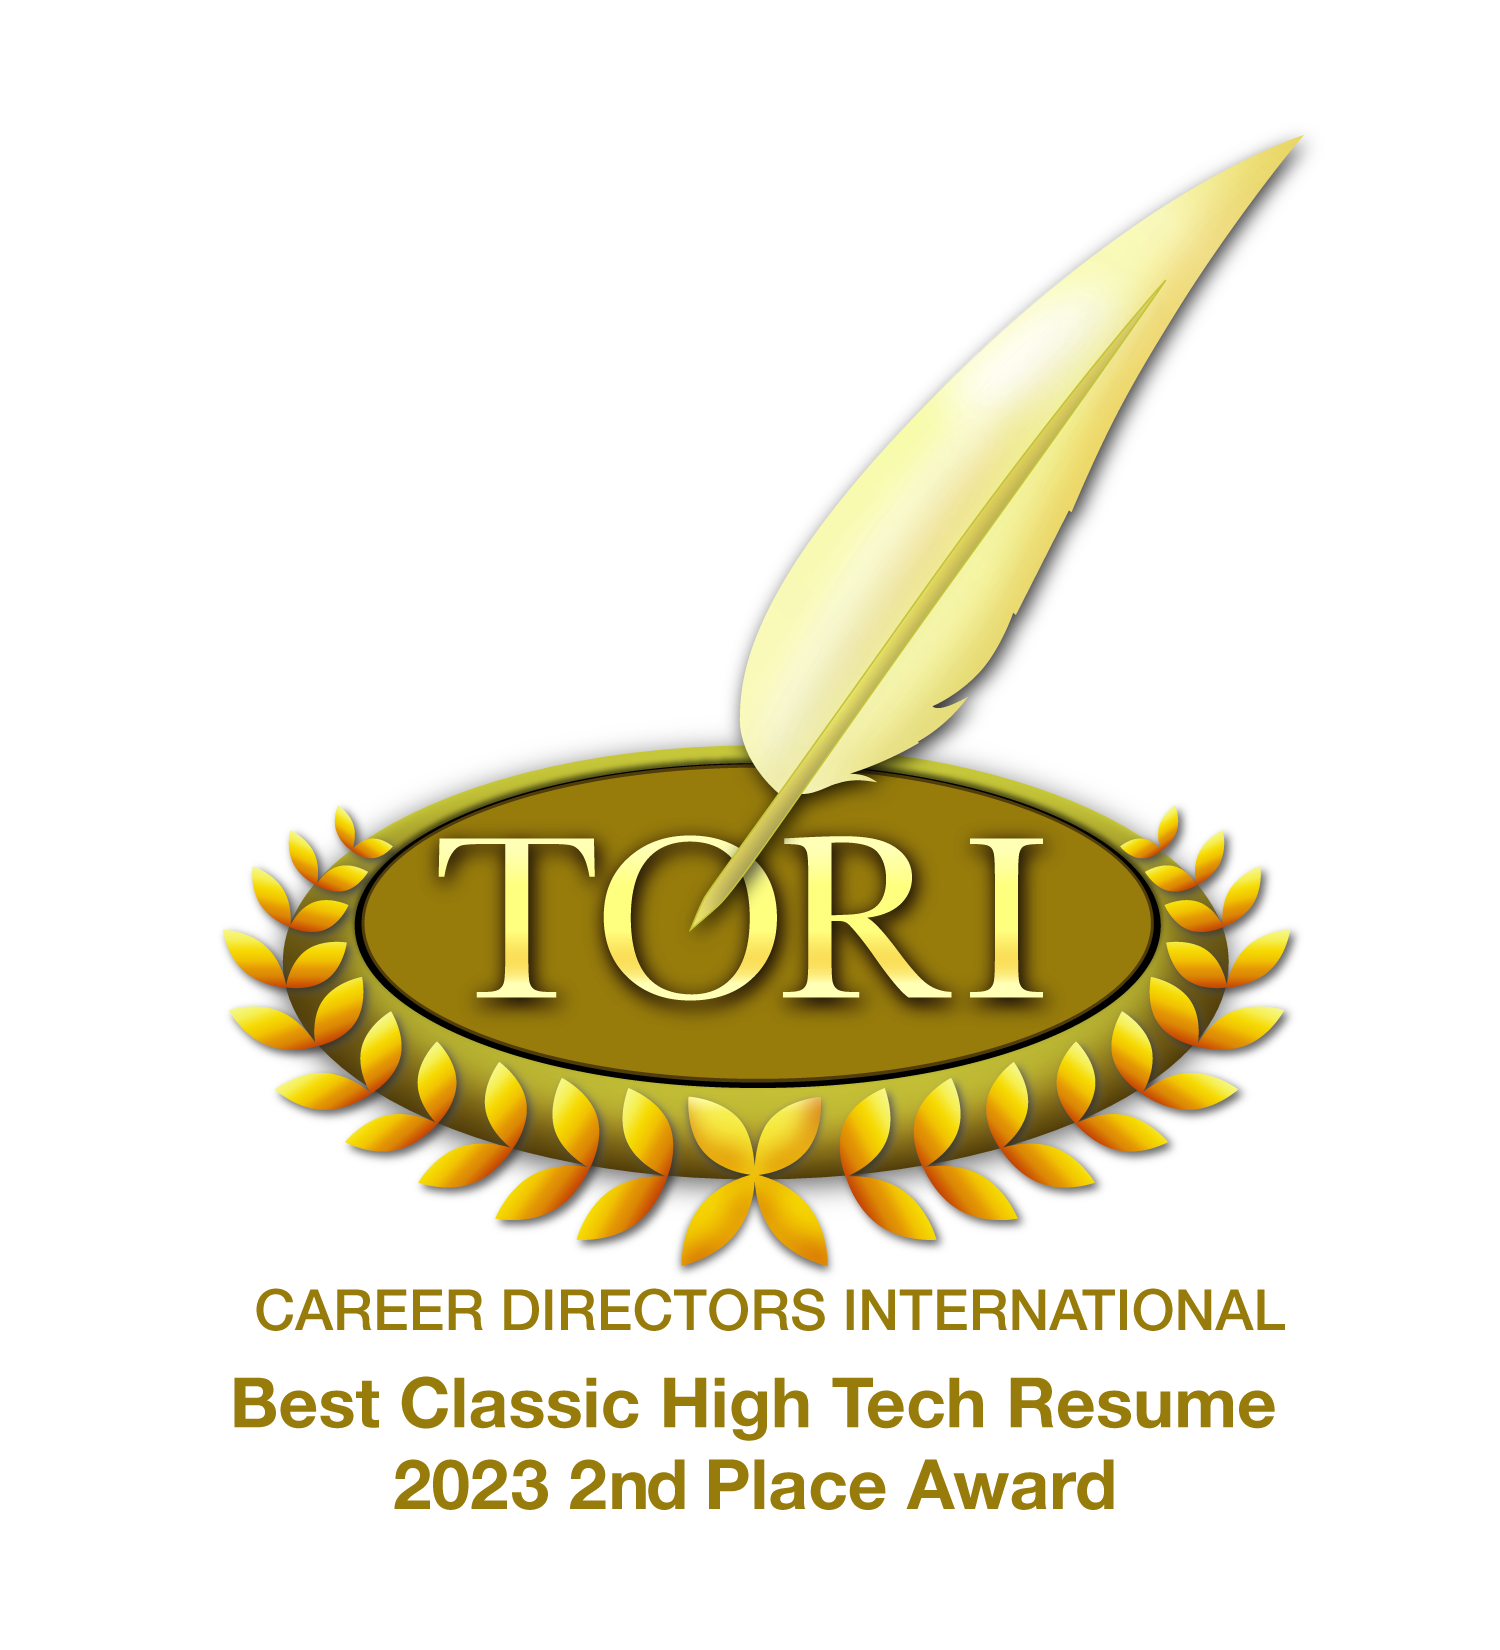 TORI Best Classic High Tech Resume 2023 2nd Place Award